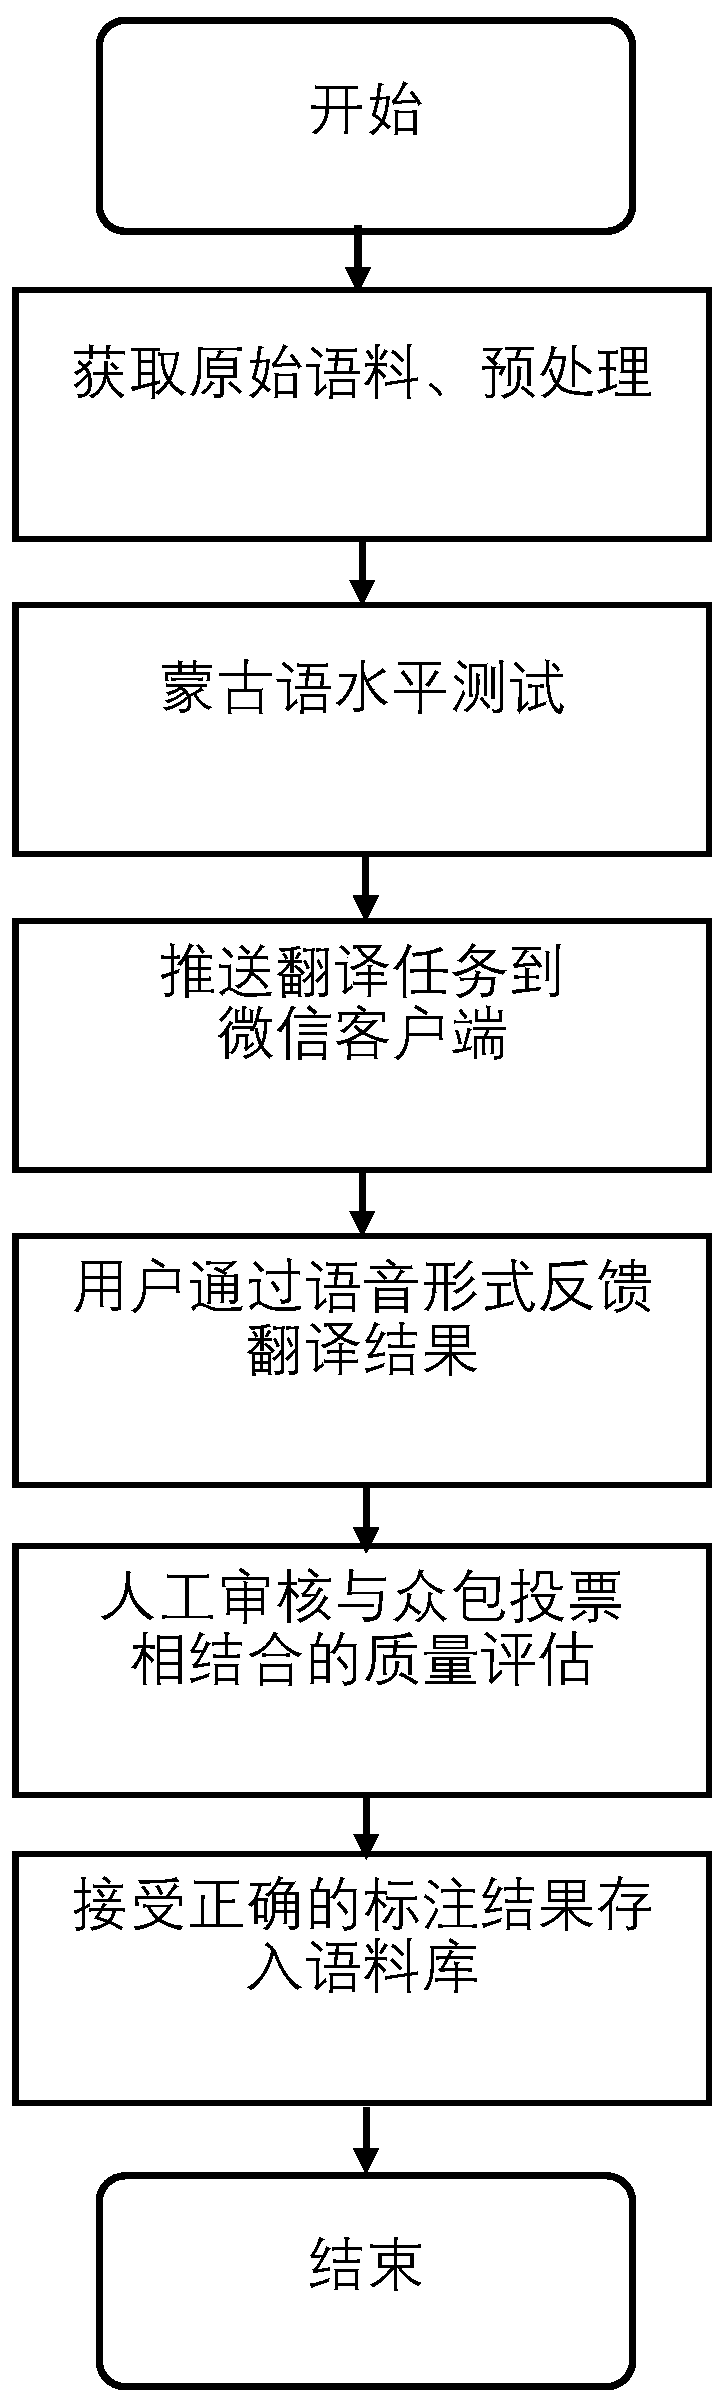 WeChat public platform-based Chinese-Mongolian corpus crowdsourcing construction method